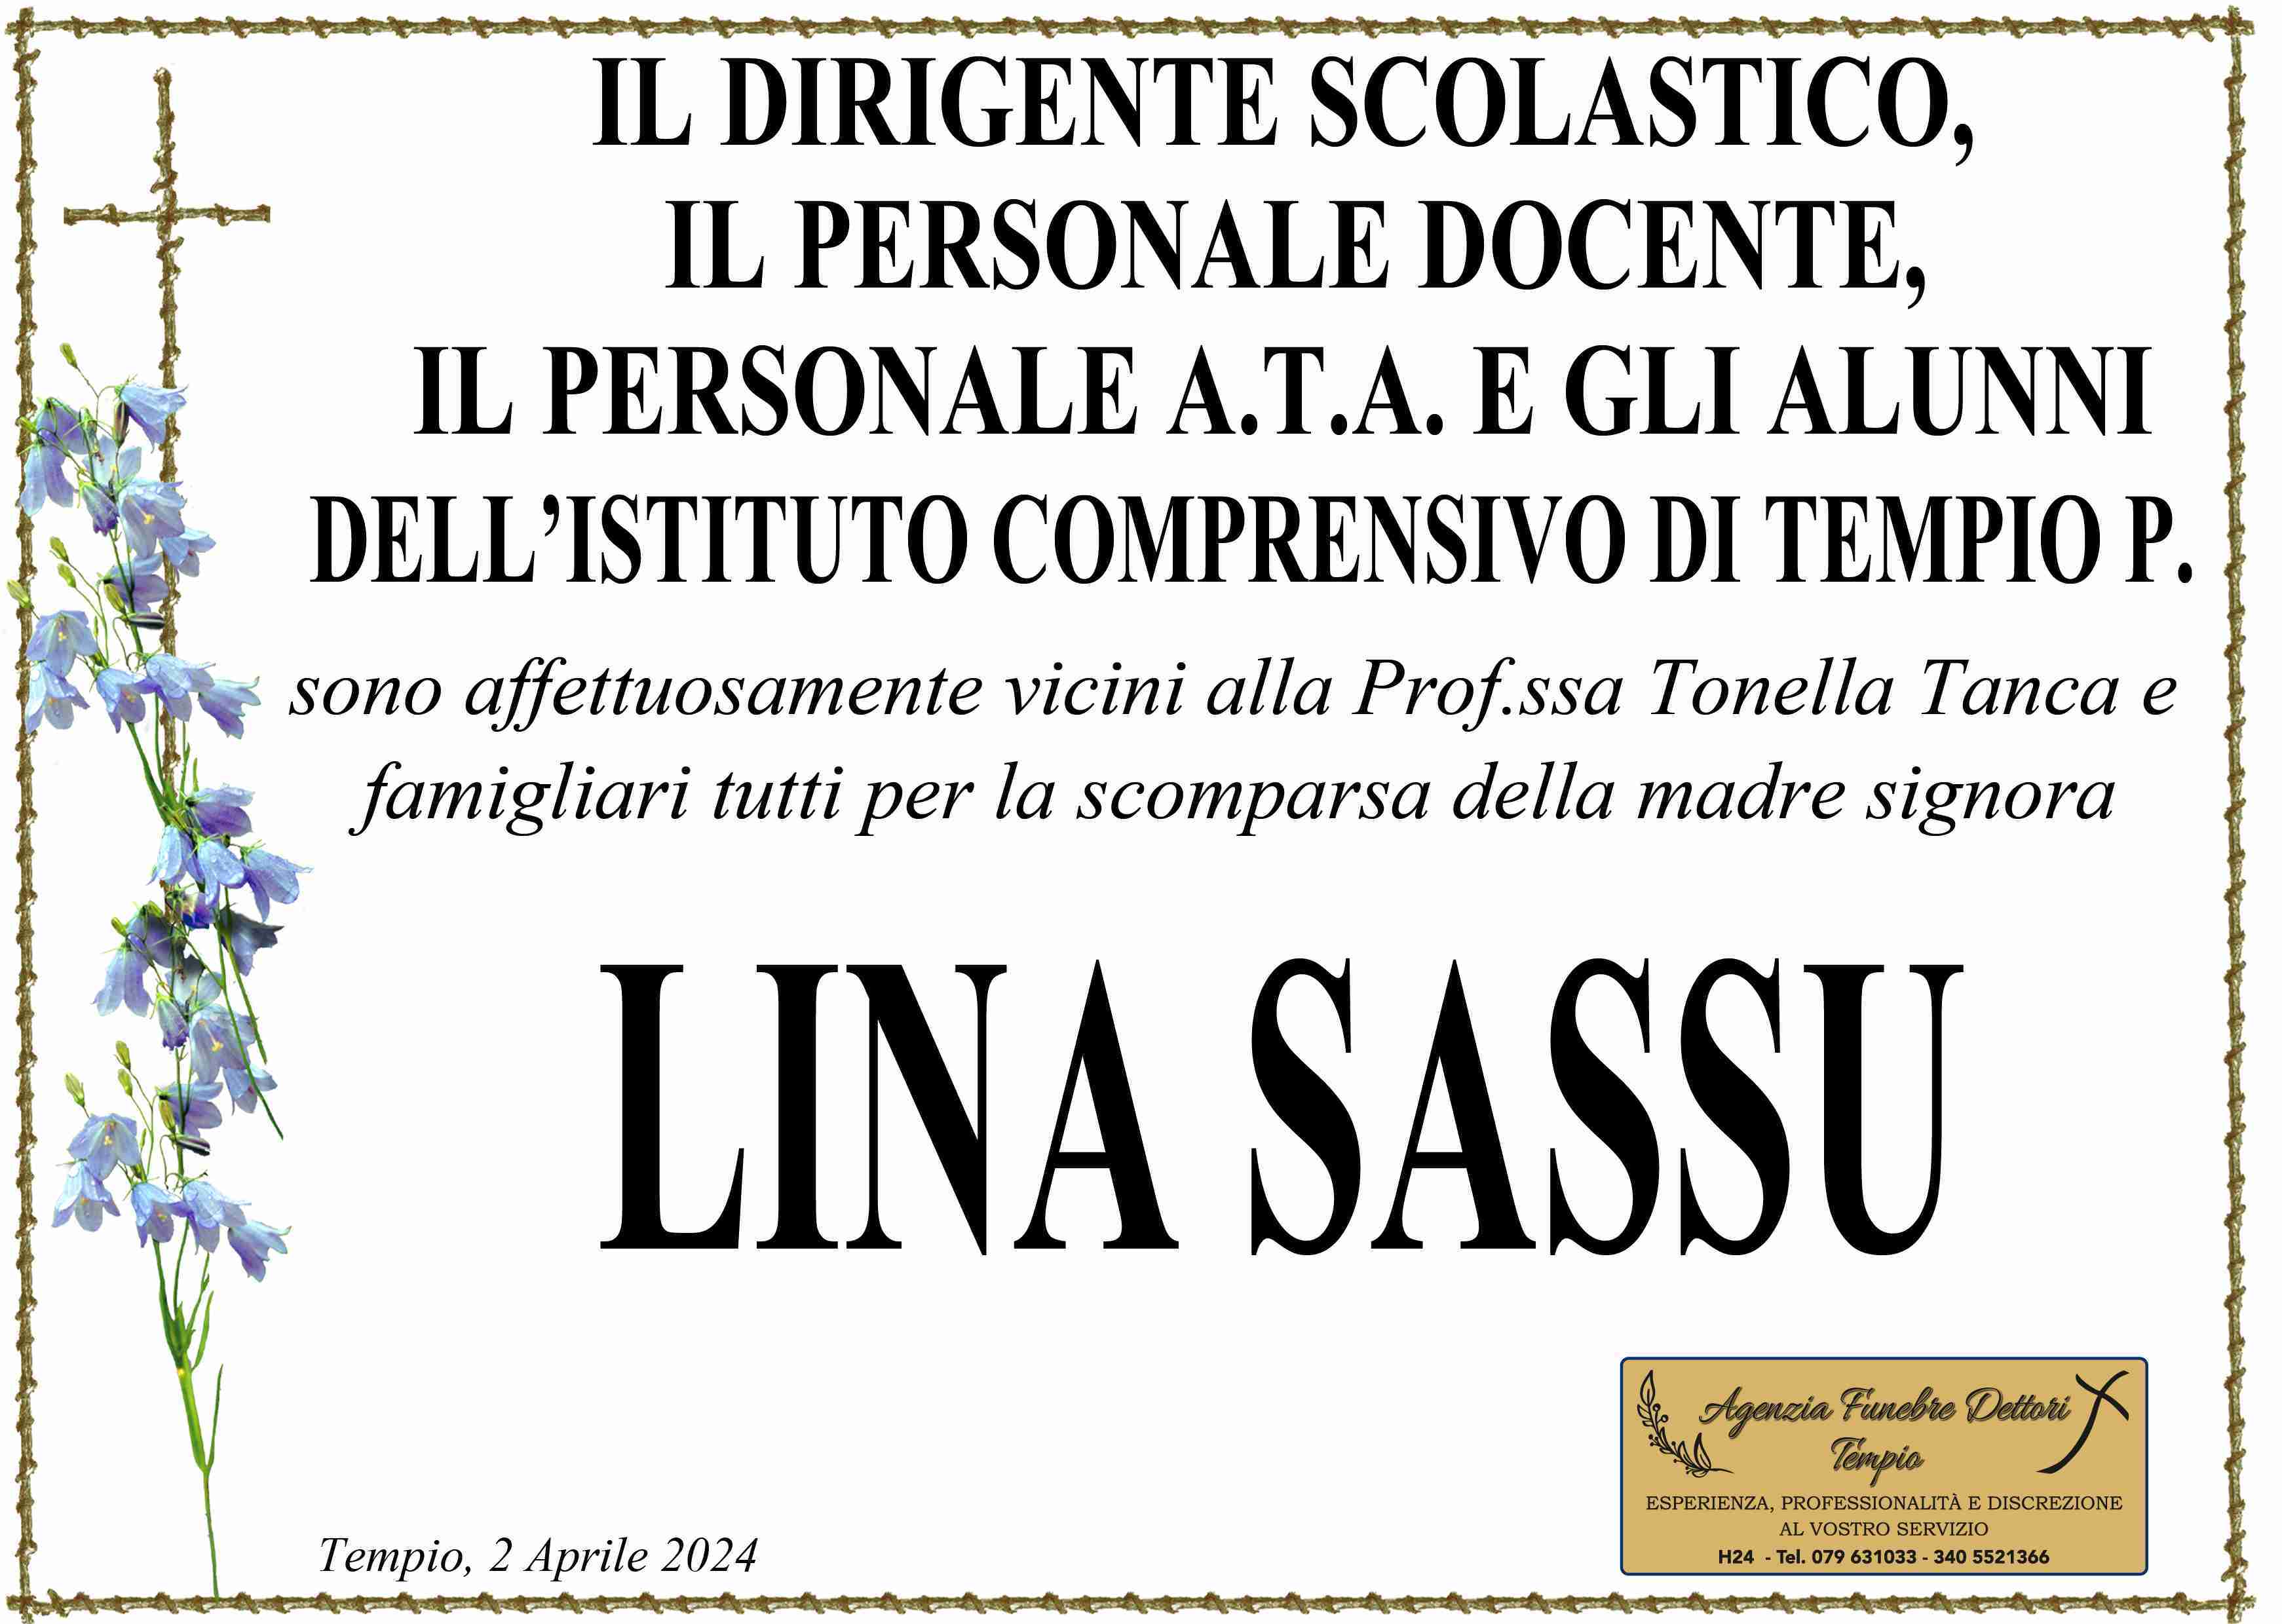 Lina Sassu